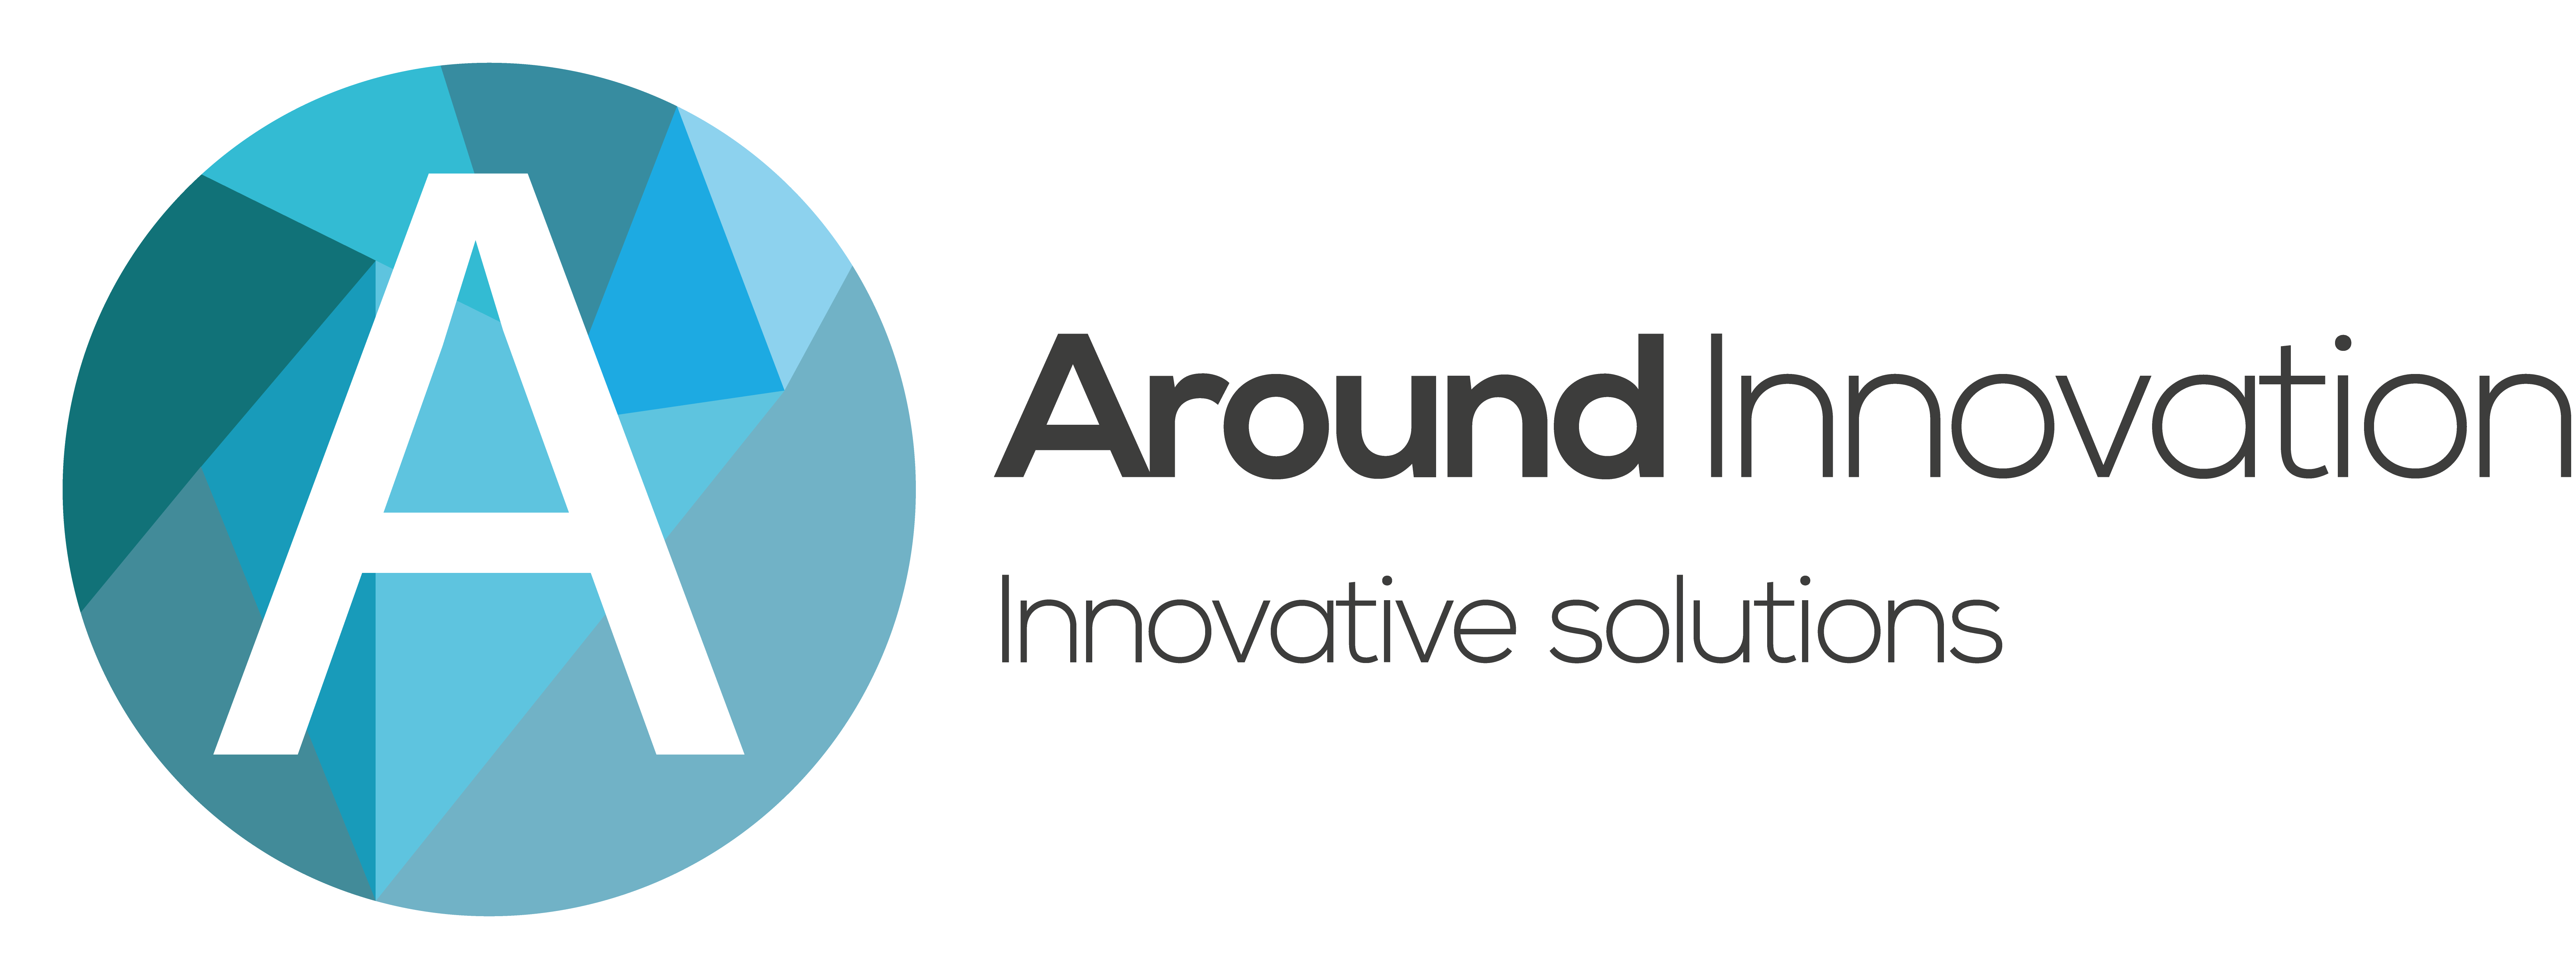 Around Innovation logo